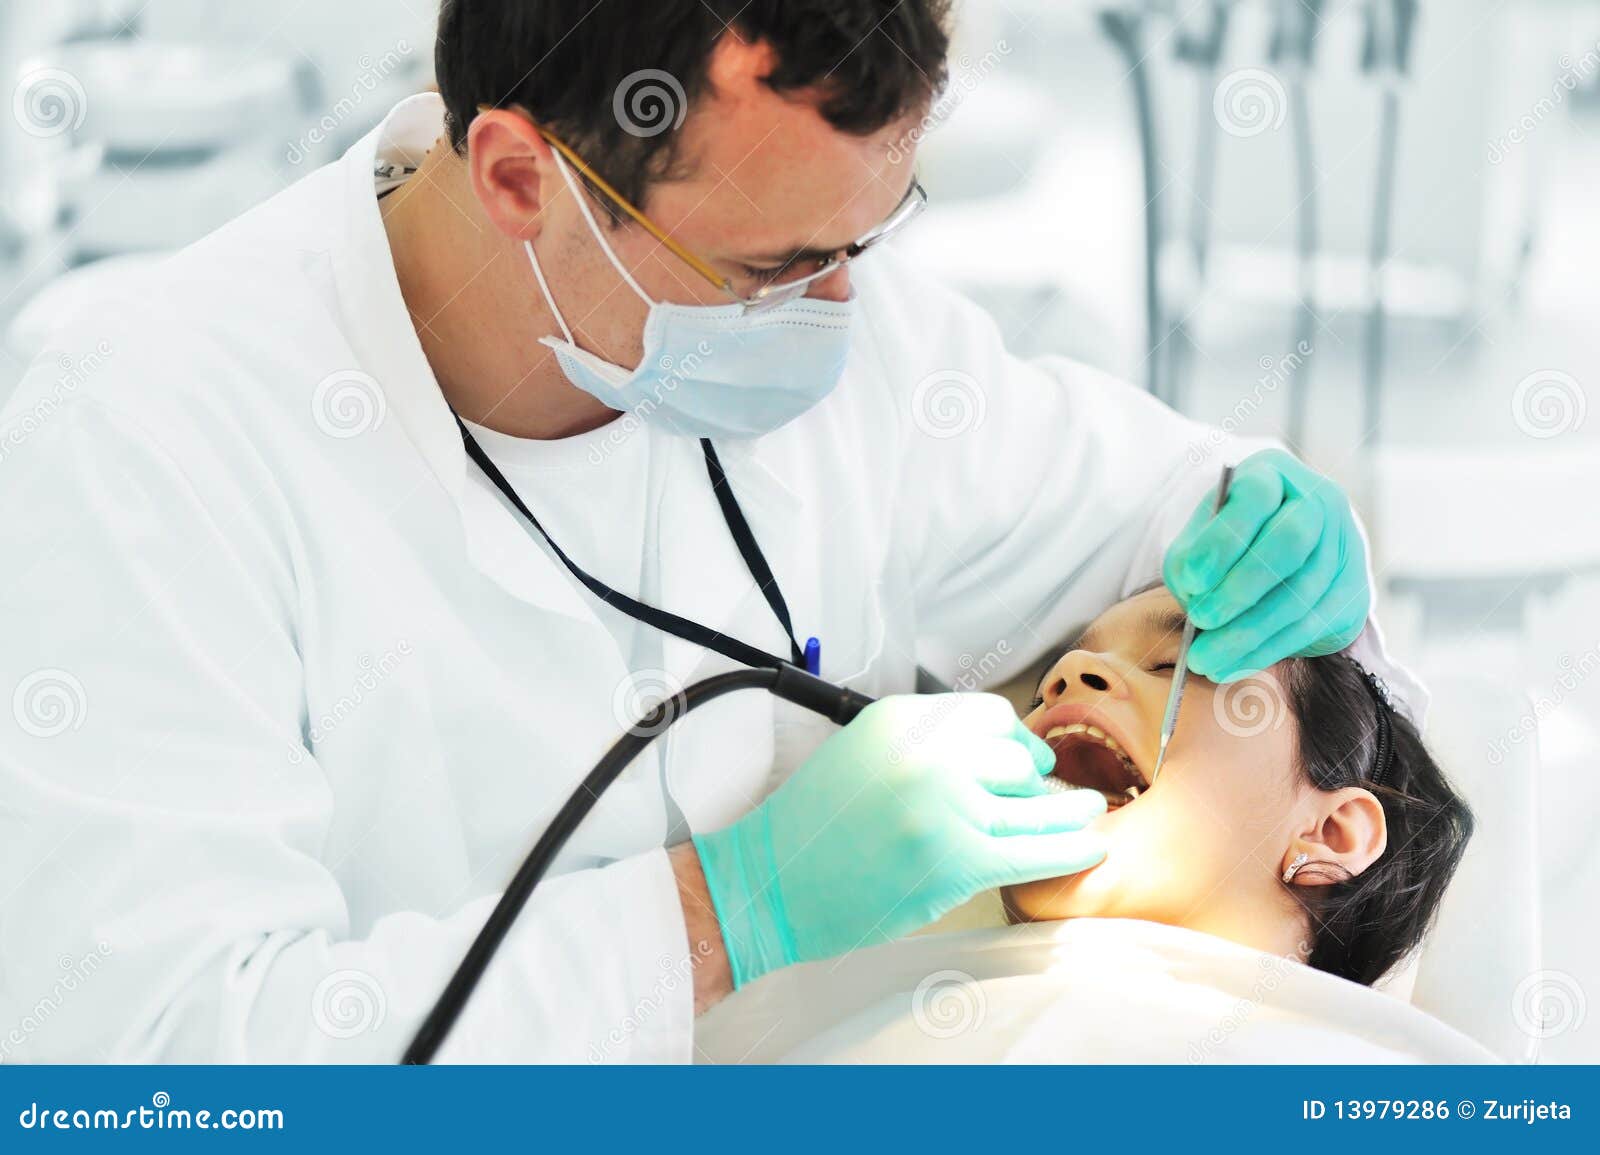 align beauty orthodontics